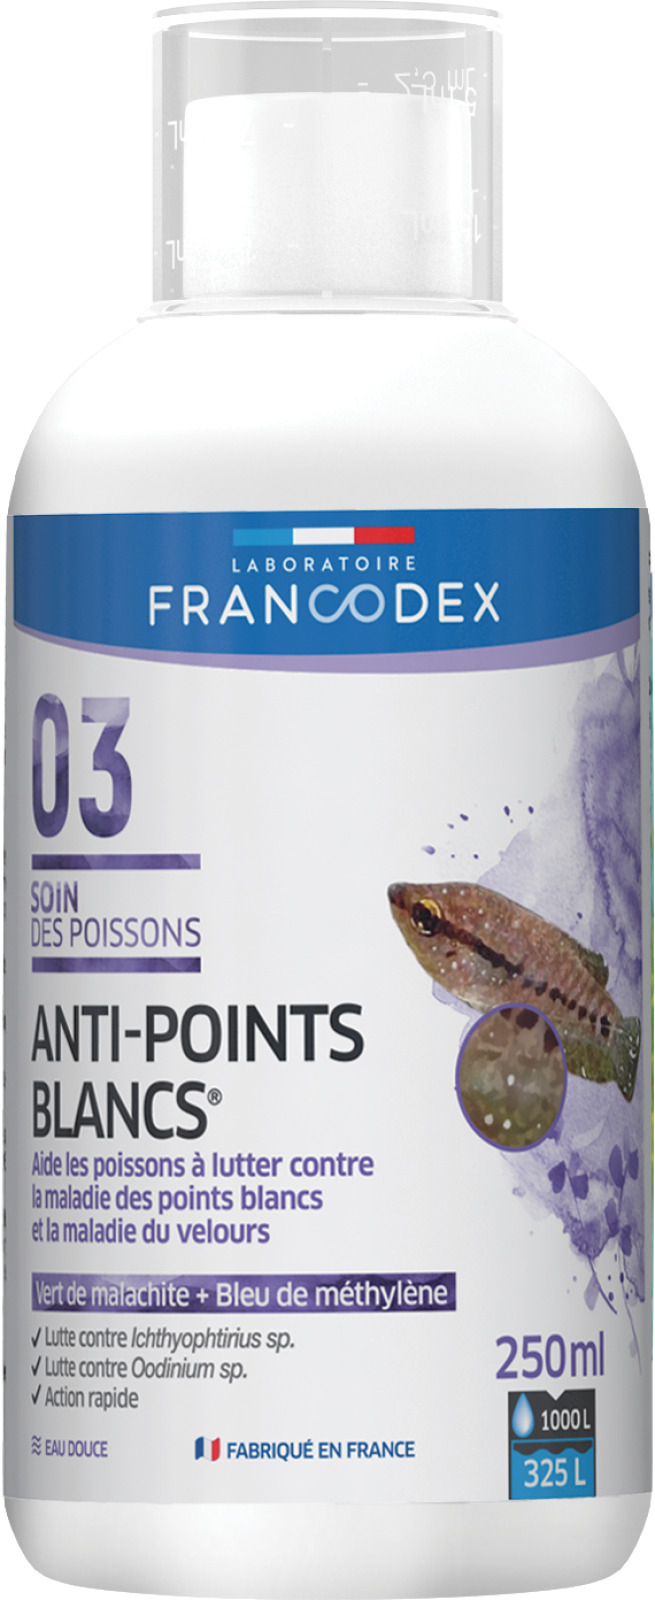 Anti punti bianchi disinfettante FRANCODEX